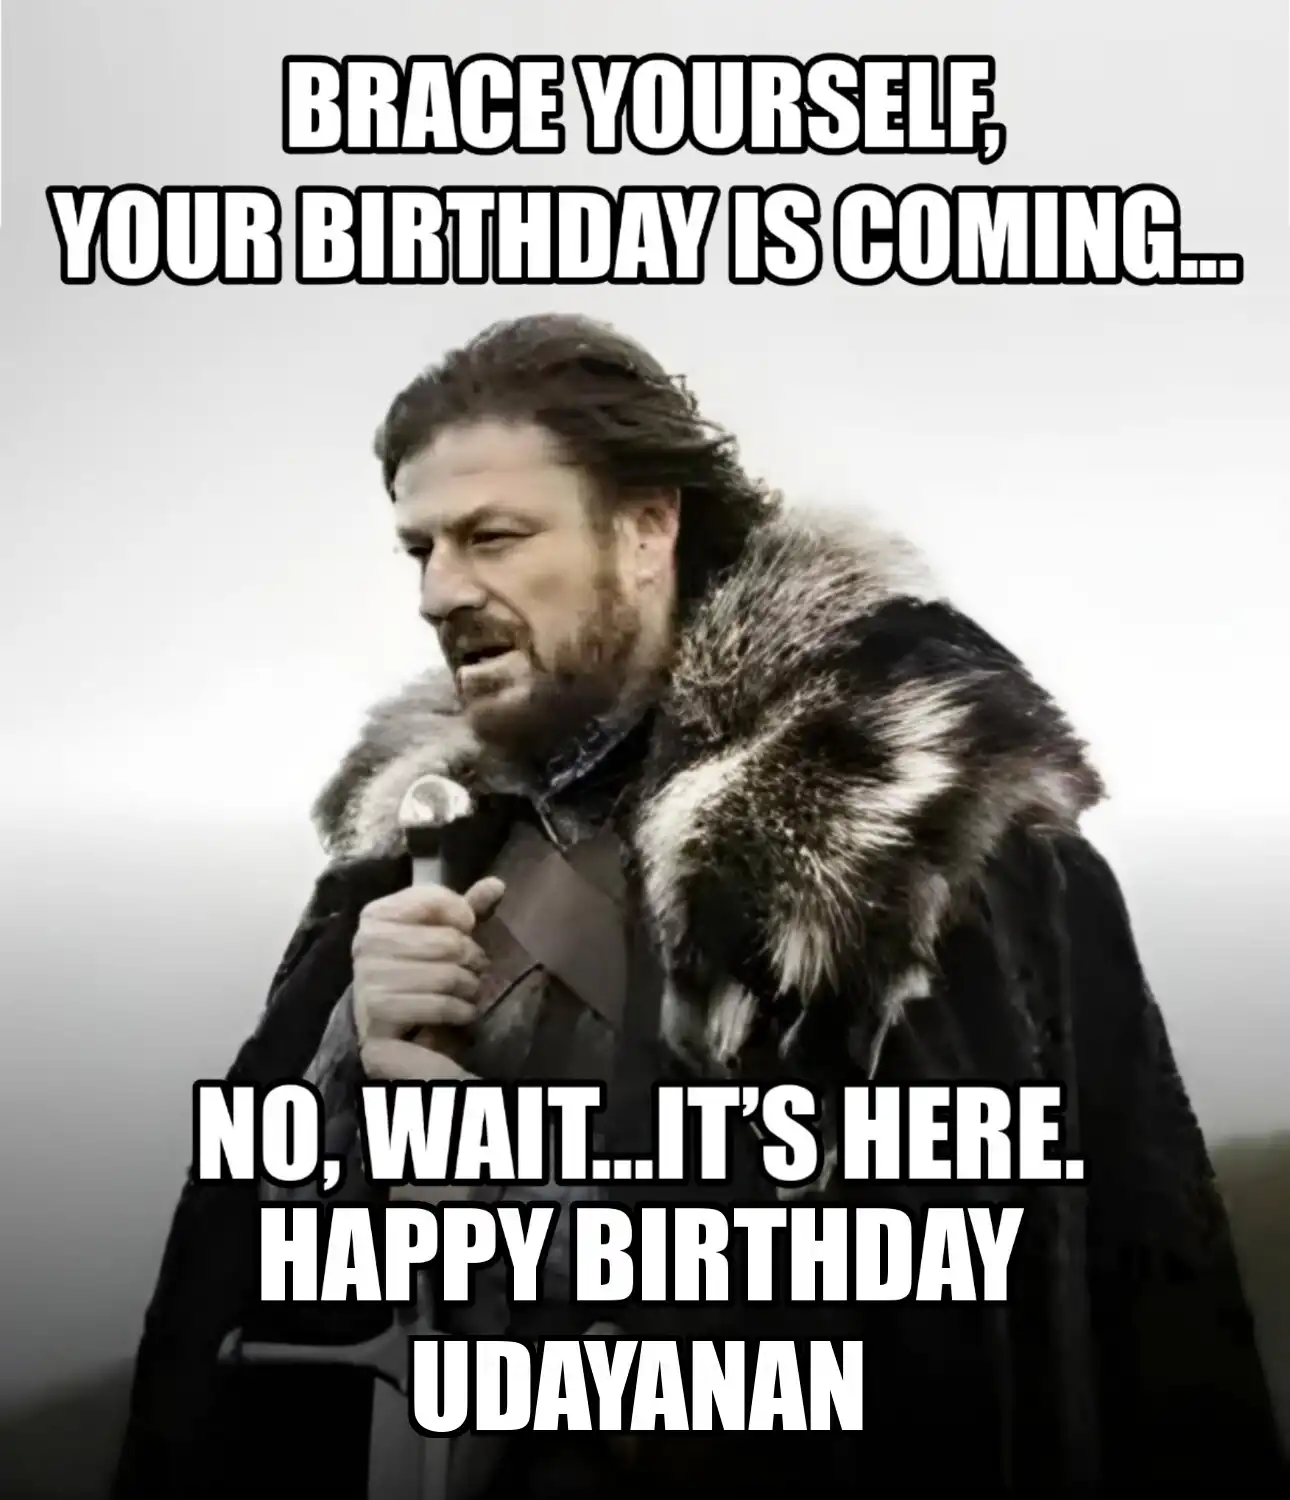 Happy Birthday Udayanan Brace Yourself Your Birthday Is Coming Meme